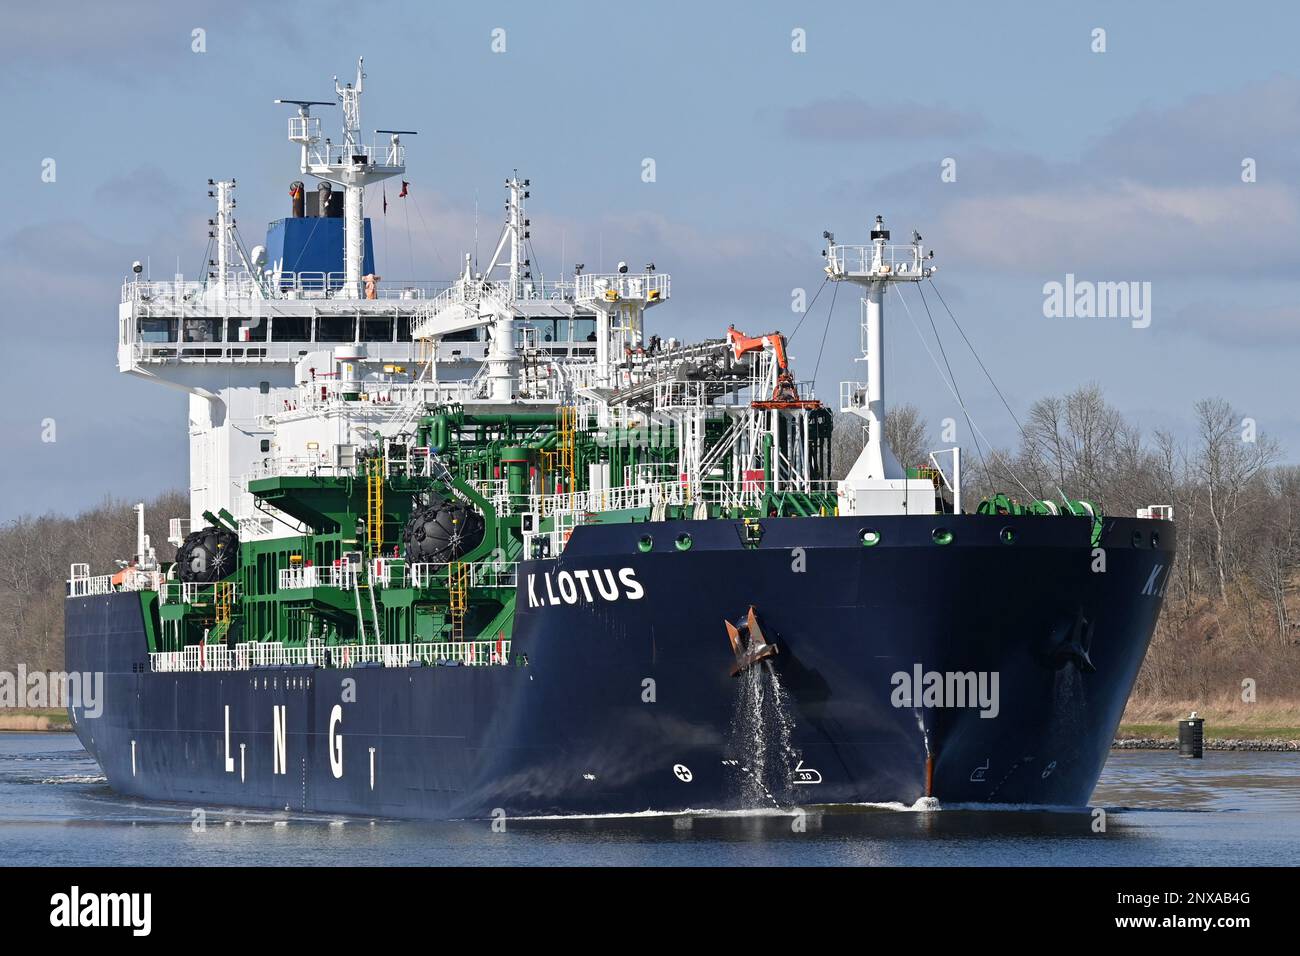 LNGBunkering Tanker K. LOTUS at the Kiel Canal Stock Photo